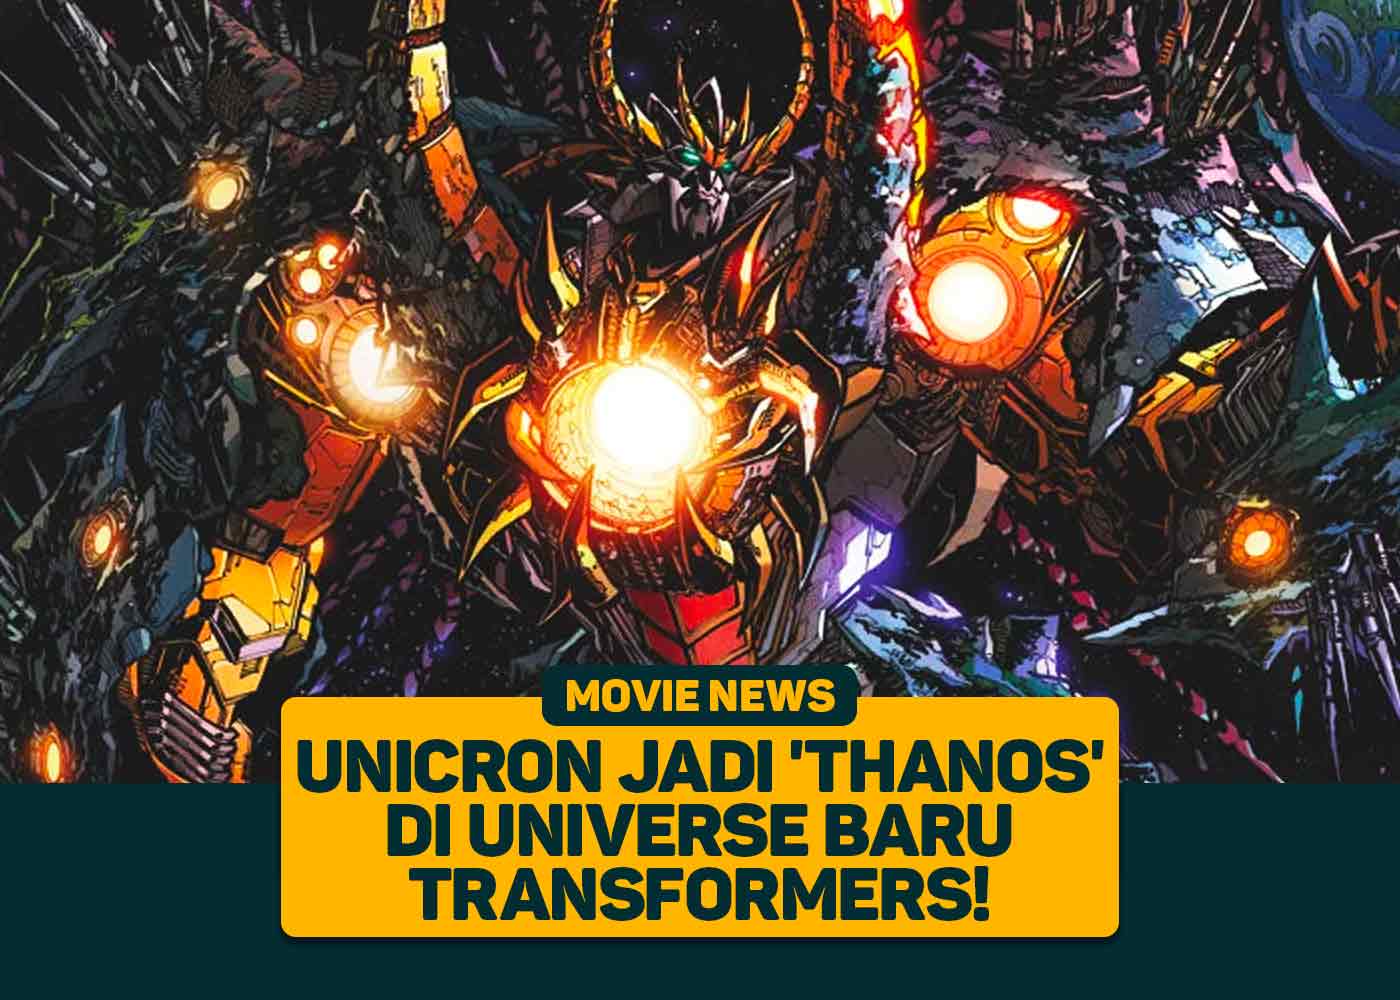 Unicron Jadi ‘Thanos’ di Universe Baru Transformers!